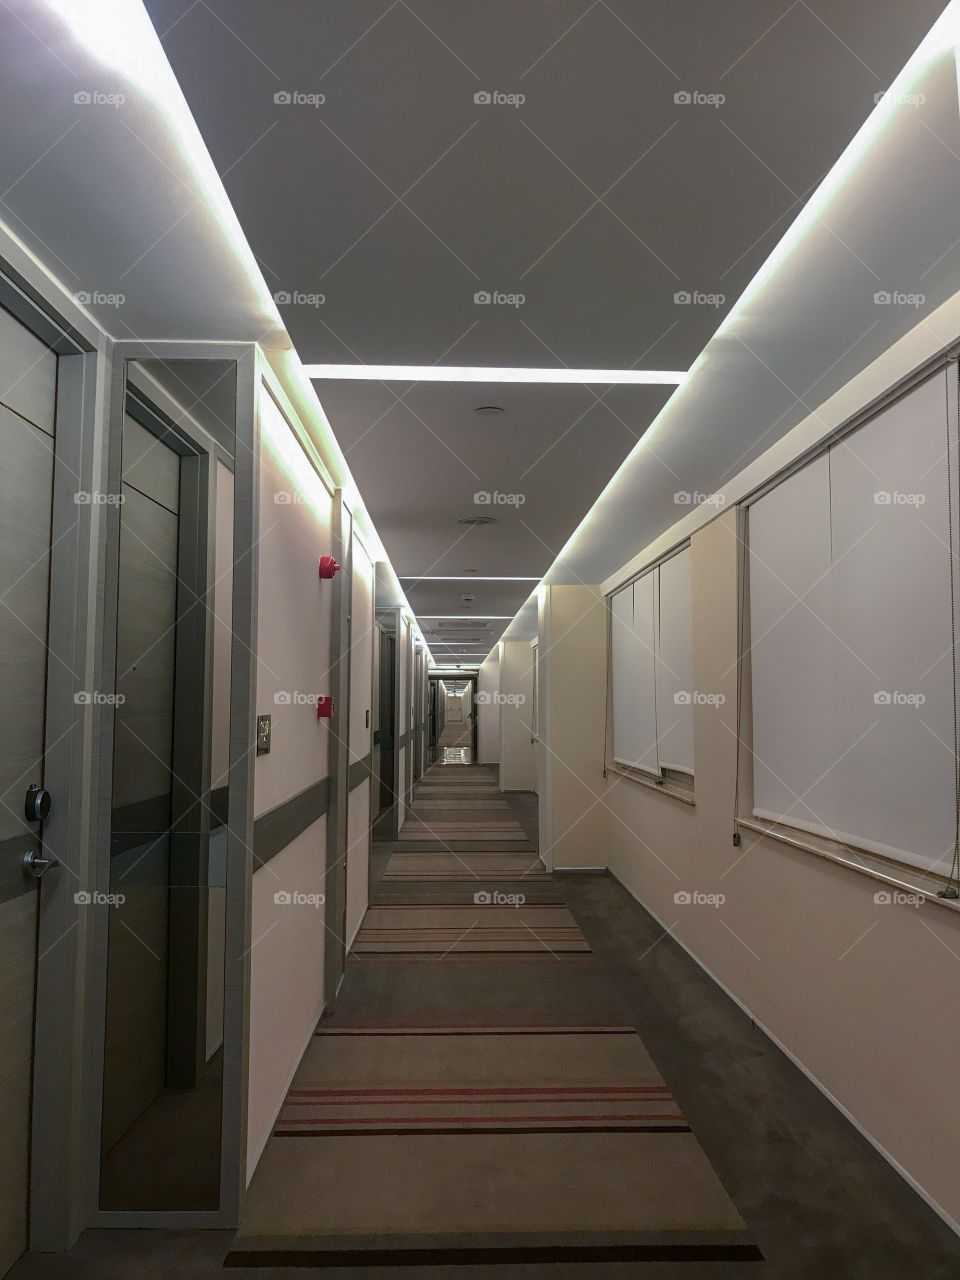 The extraordinary corridors ..